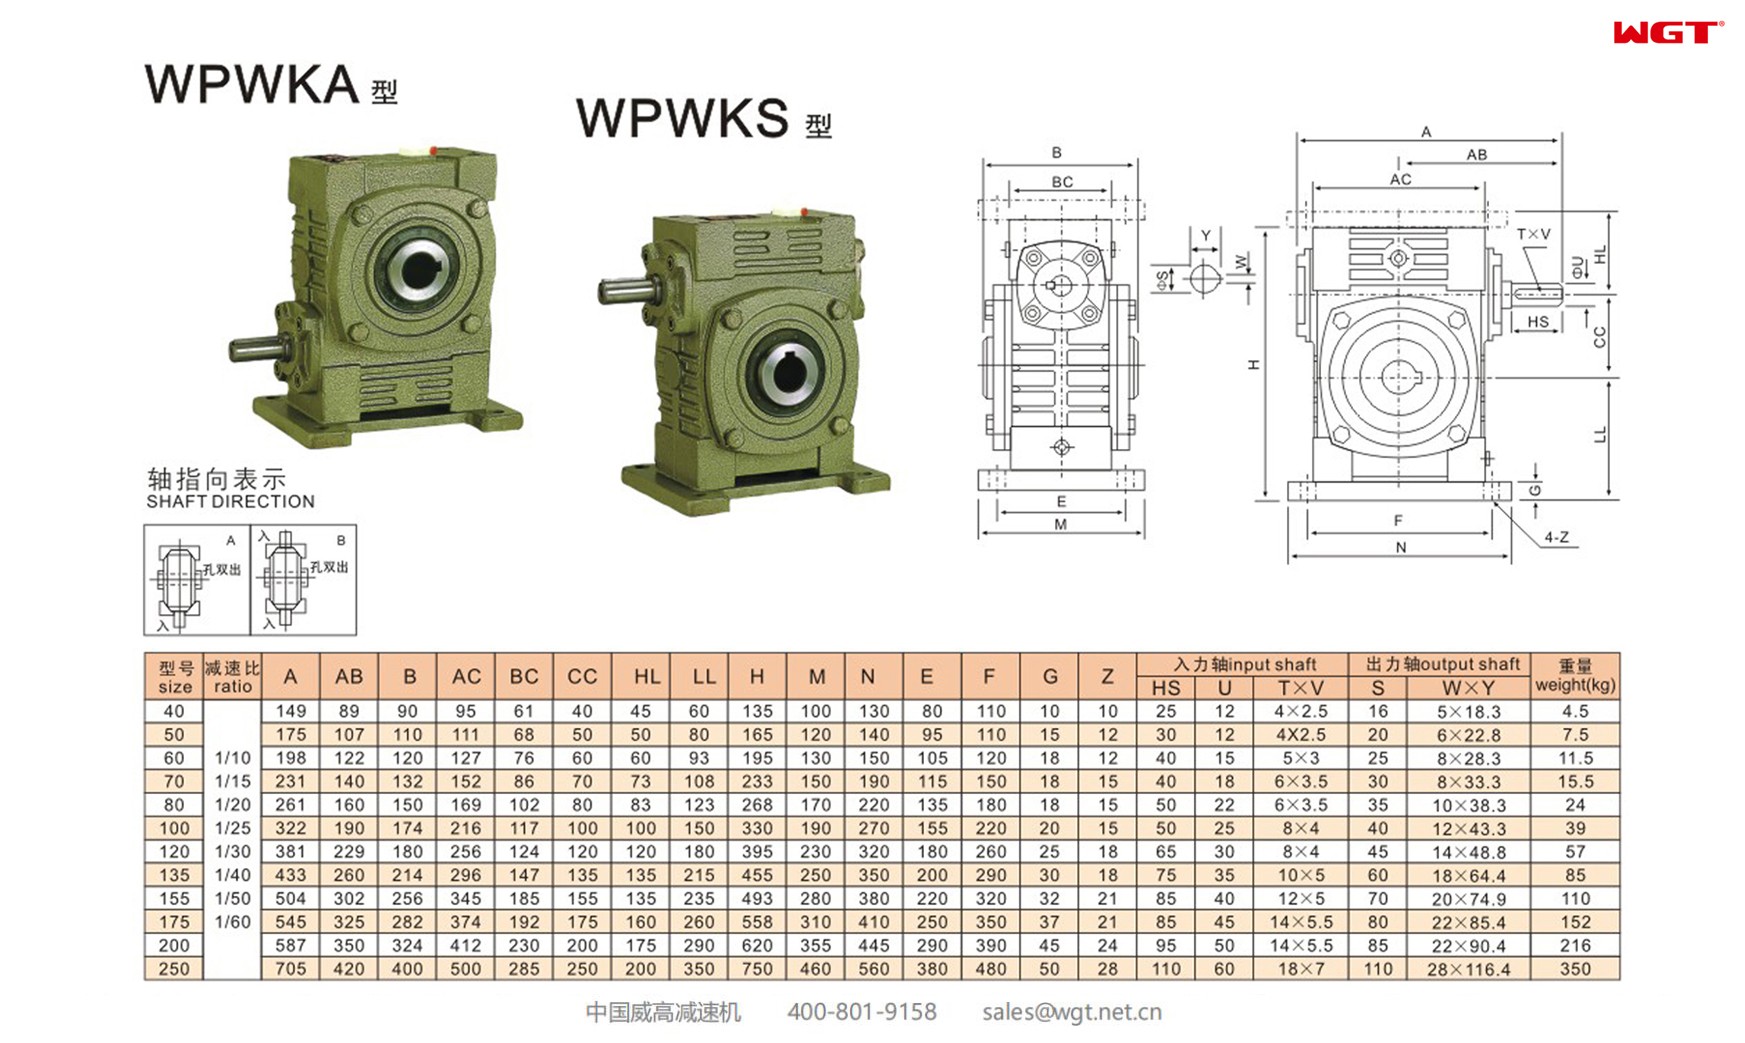 WPWKS155 worm gear reducer universal speed reducer 